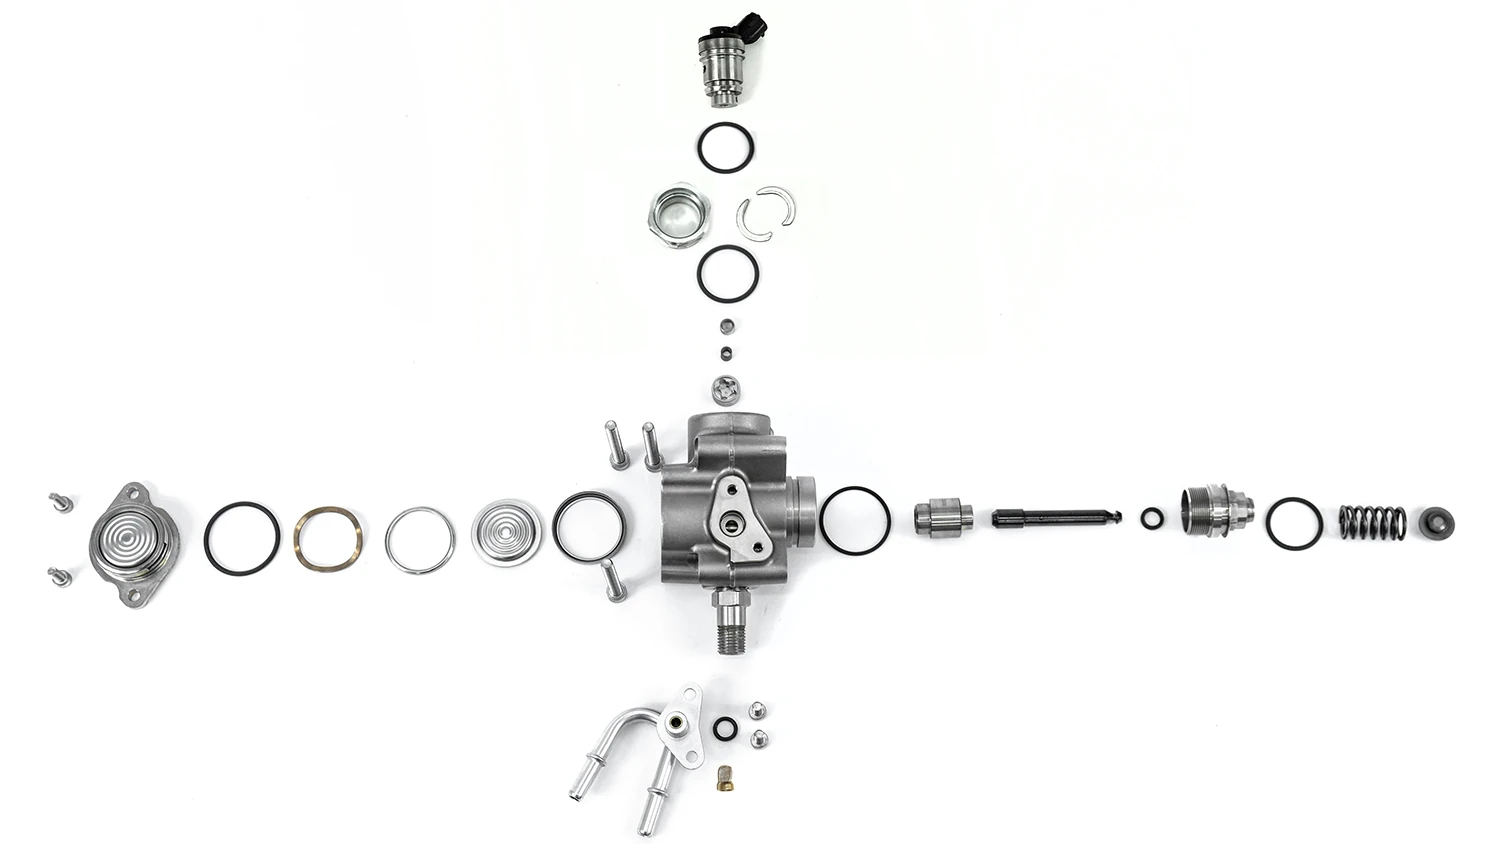 Mazdaspeed 6 high pressure fuel pump rebuild kit